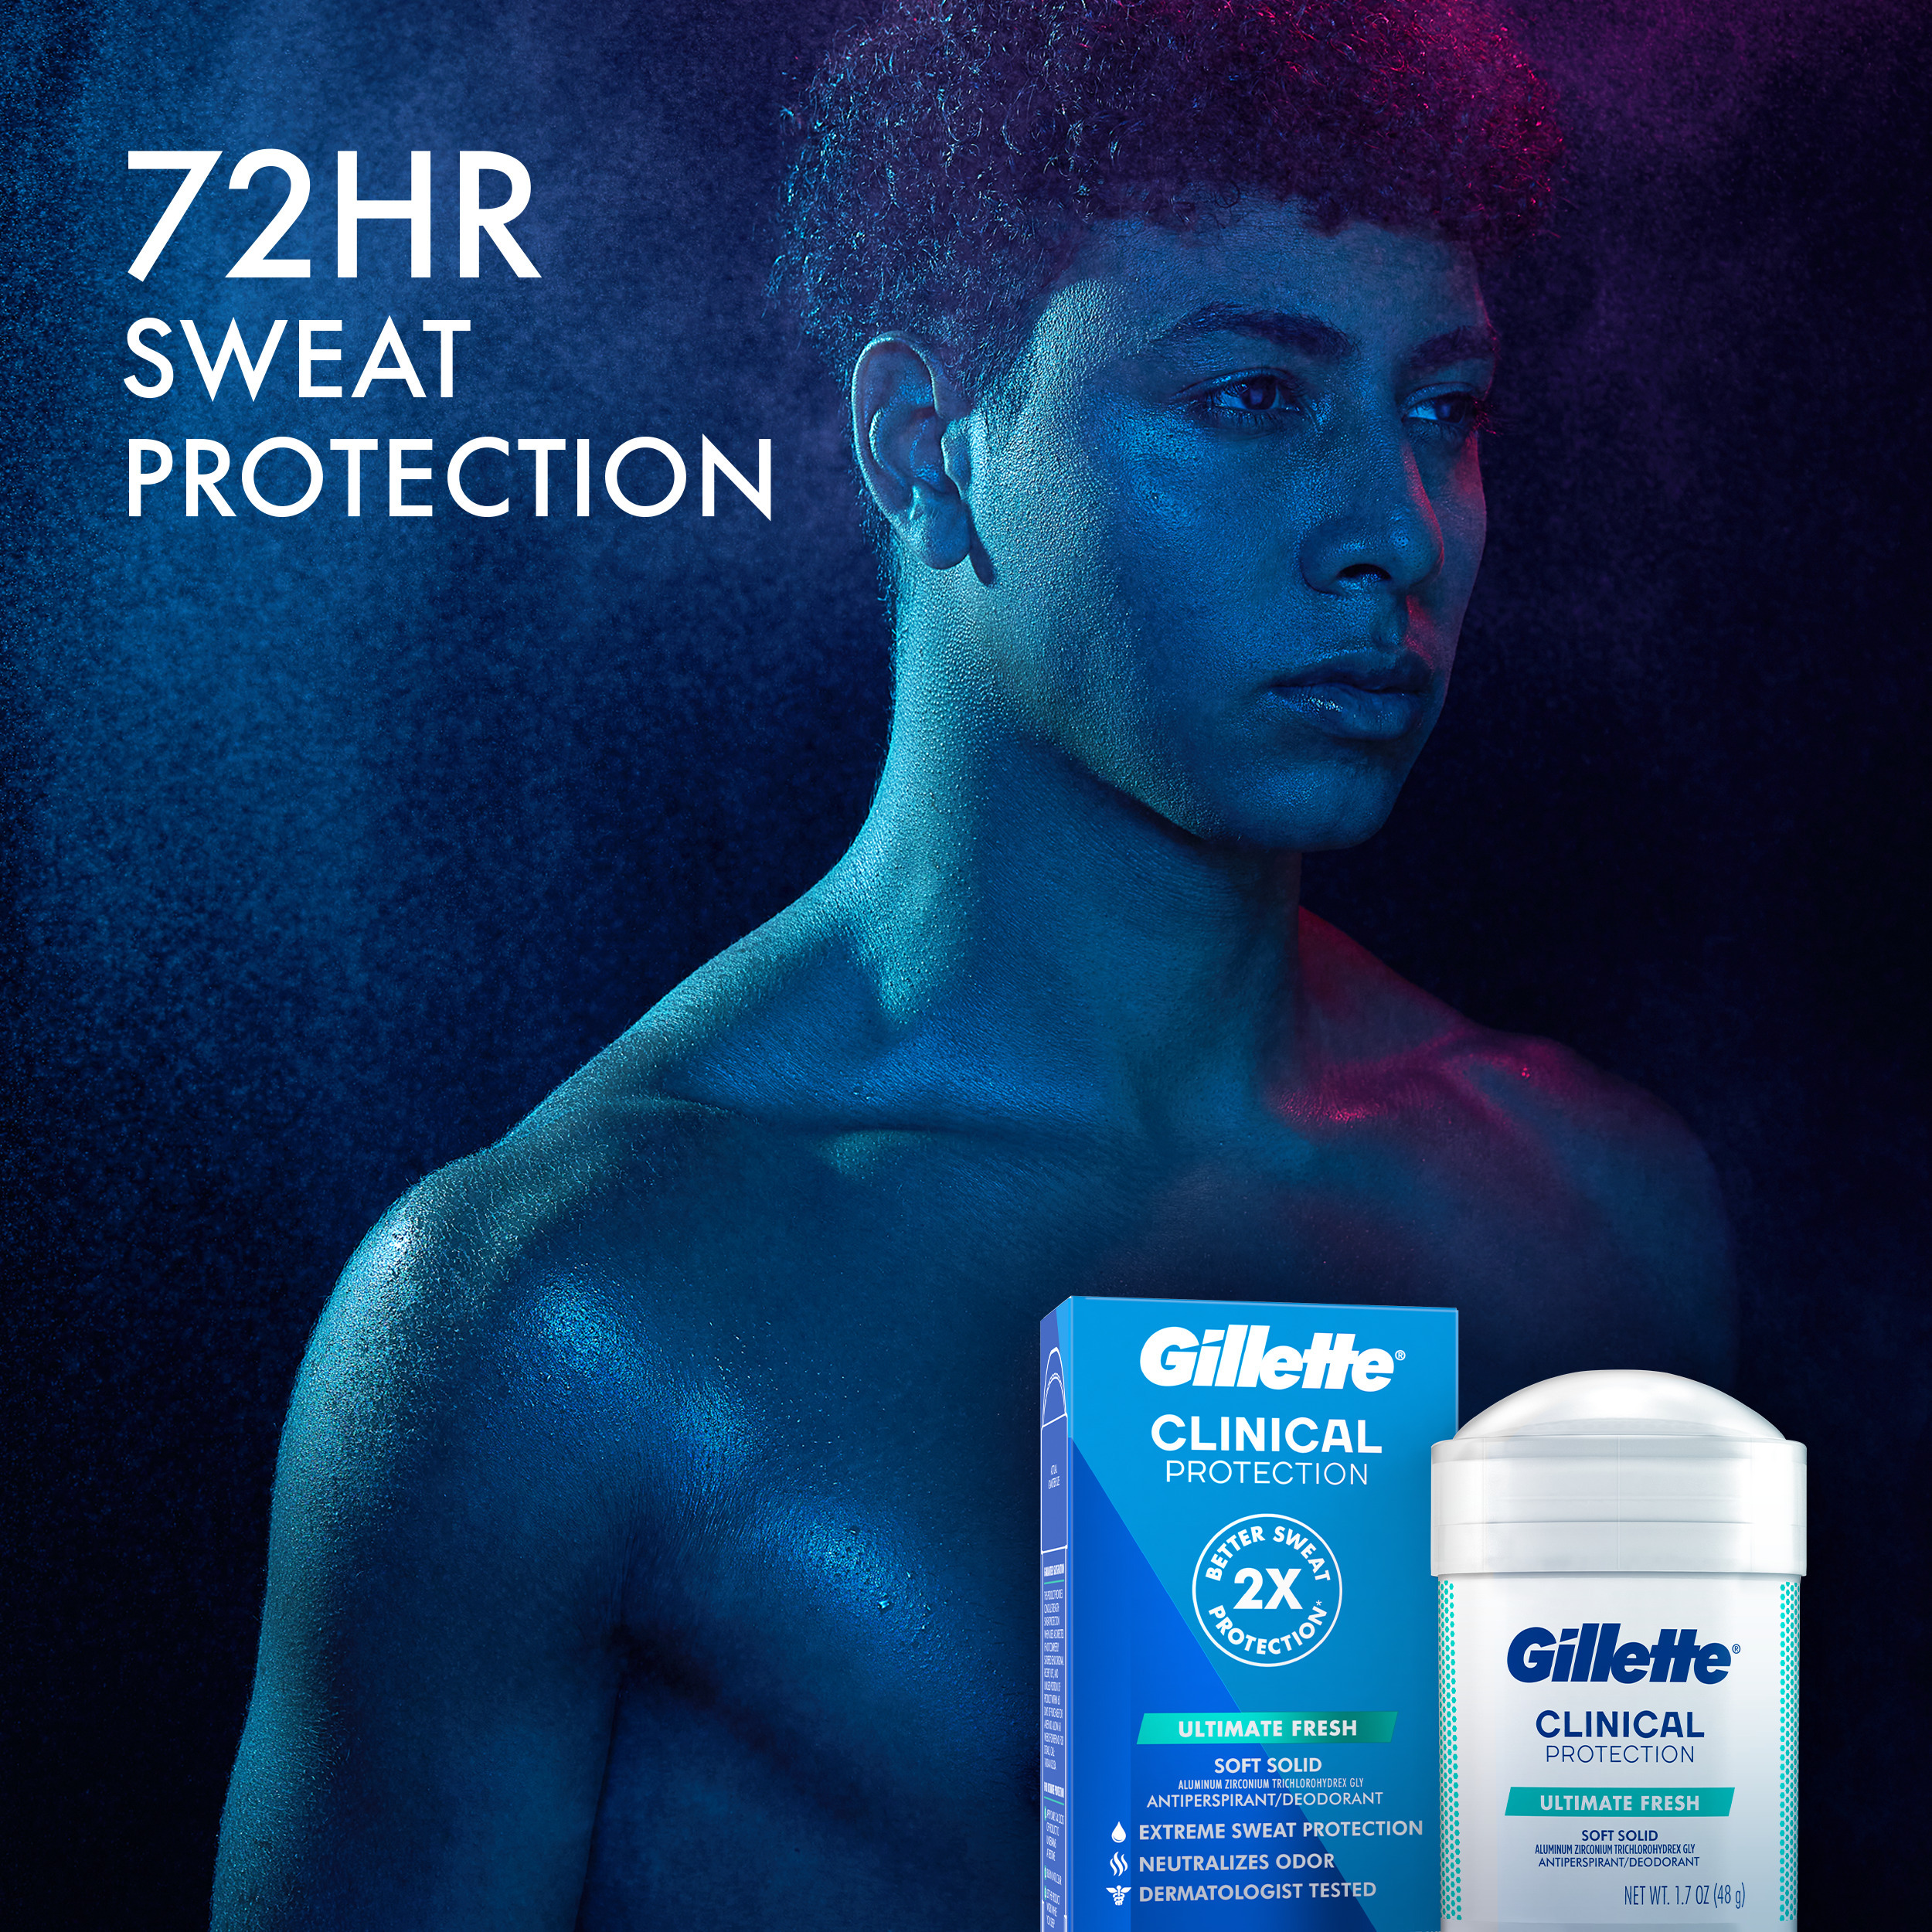 Gillette Antiperspirant Deodorant for Men, Clinical Soft Solid, Ultimate Fresh, 72 Hr. Sweat Protection, 2.6 oz - image 3 of 7